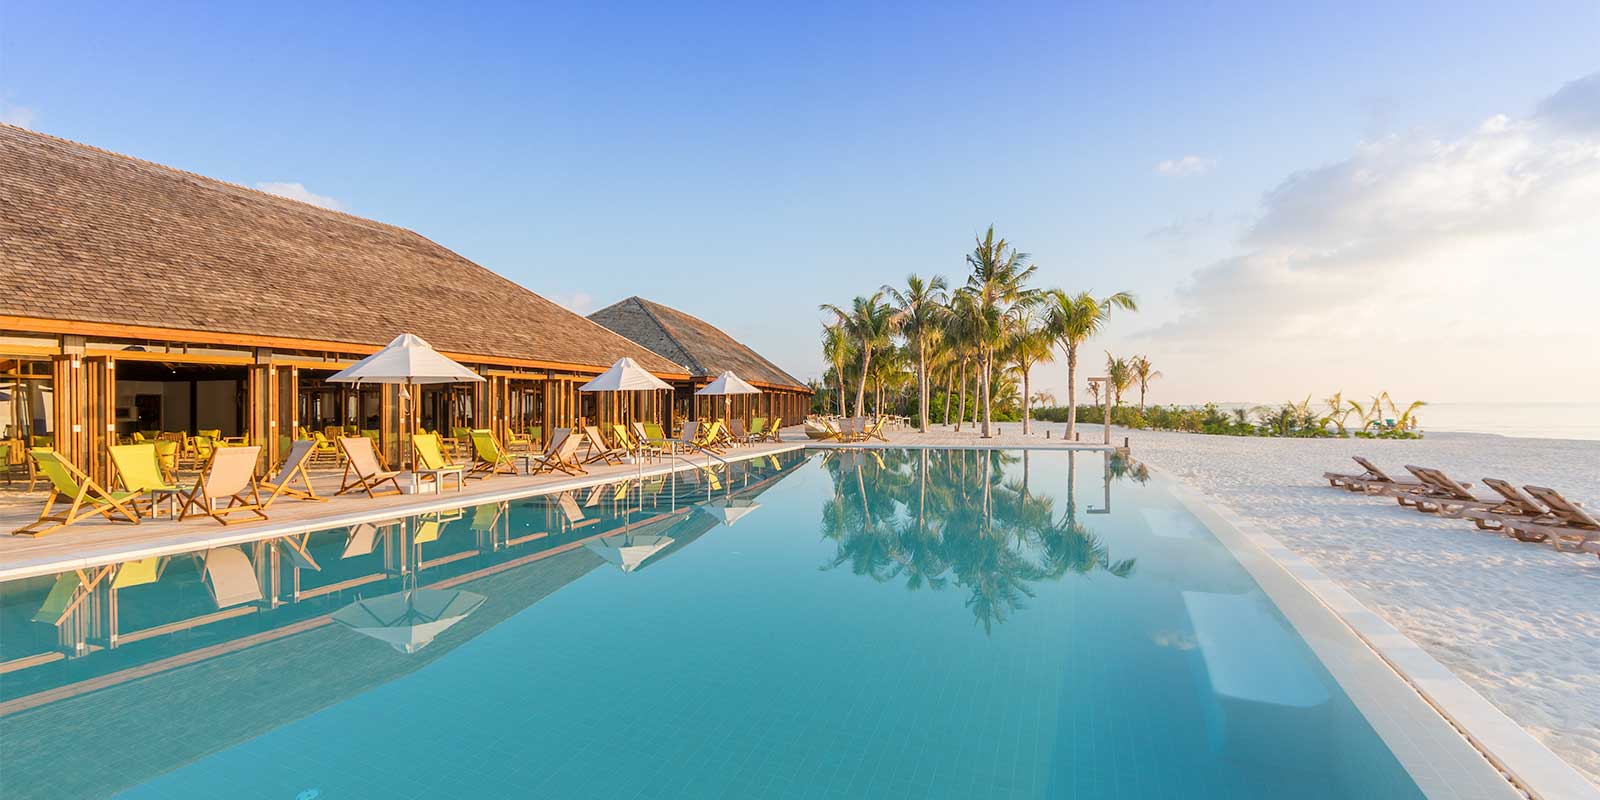 Swimming pool at Innahura Resort in the Maldives